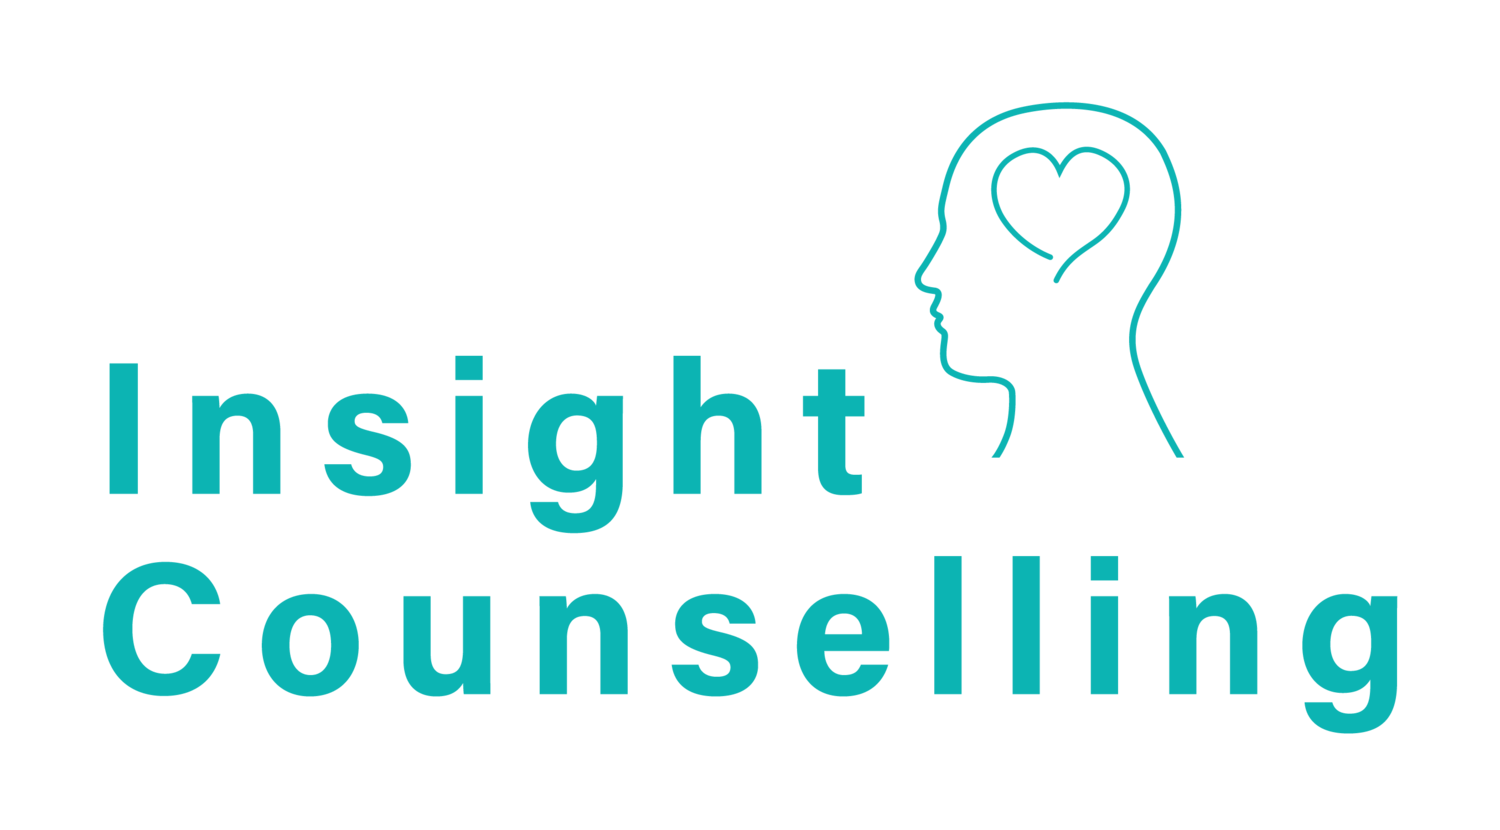 Insight Counselling London